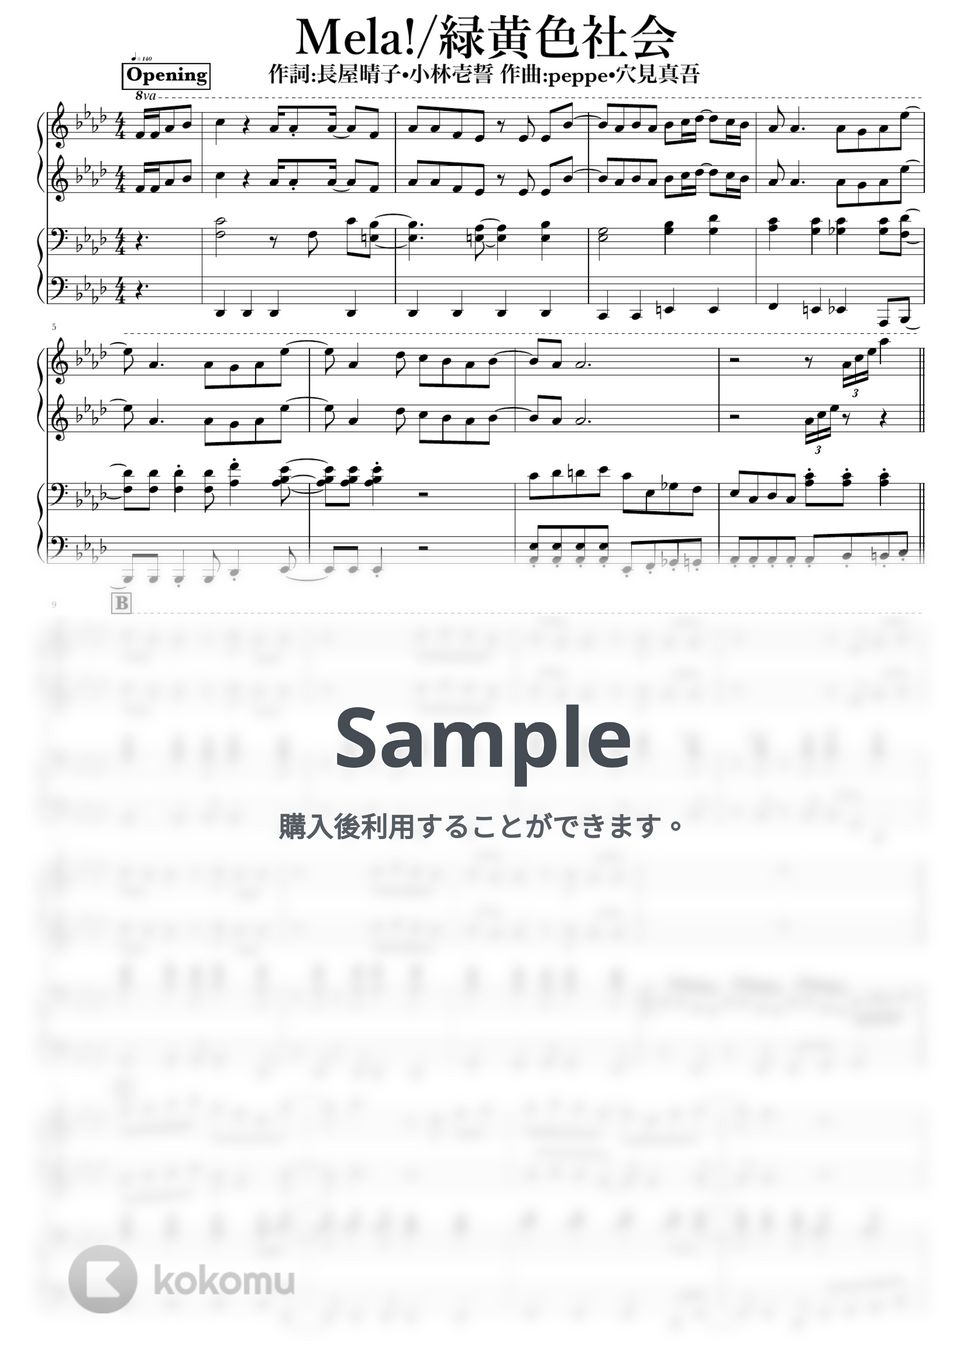 緑黄色社会 - Mela! by NOTES music